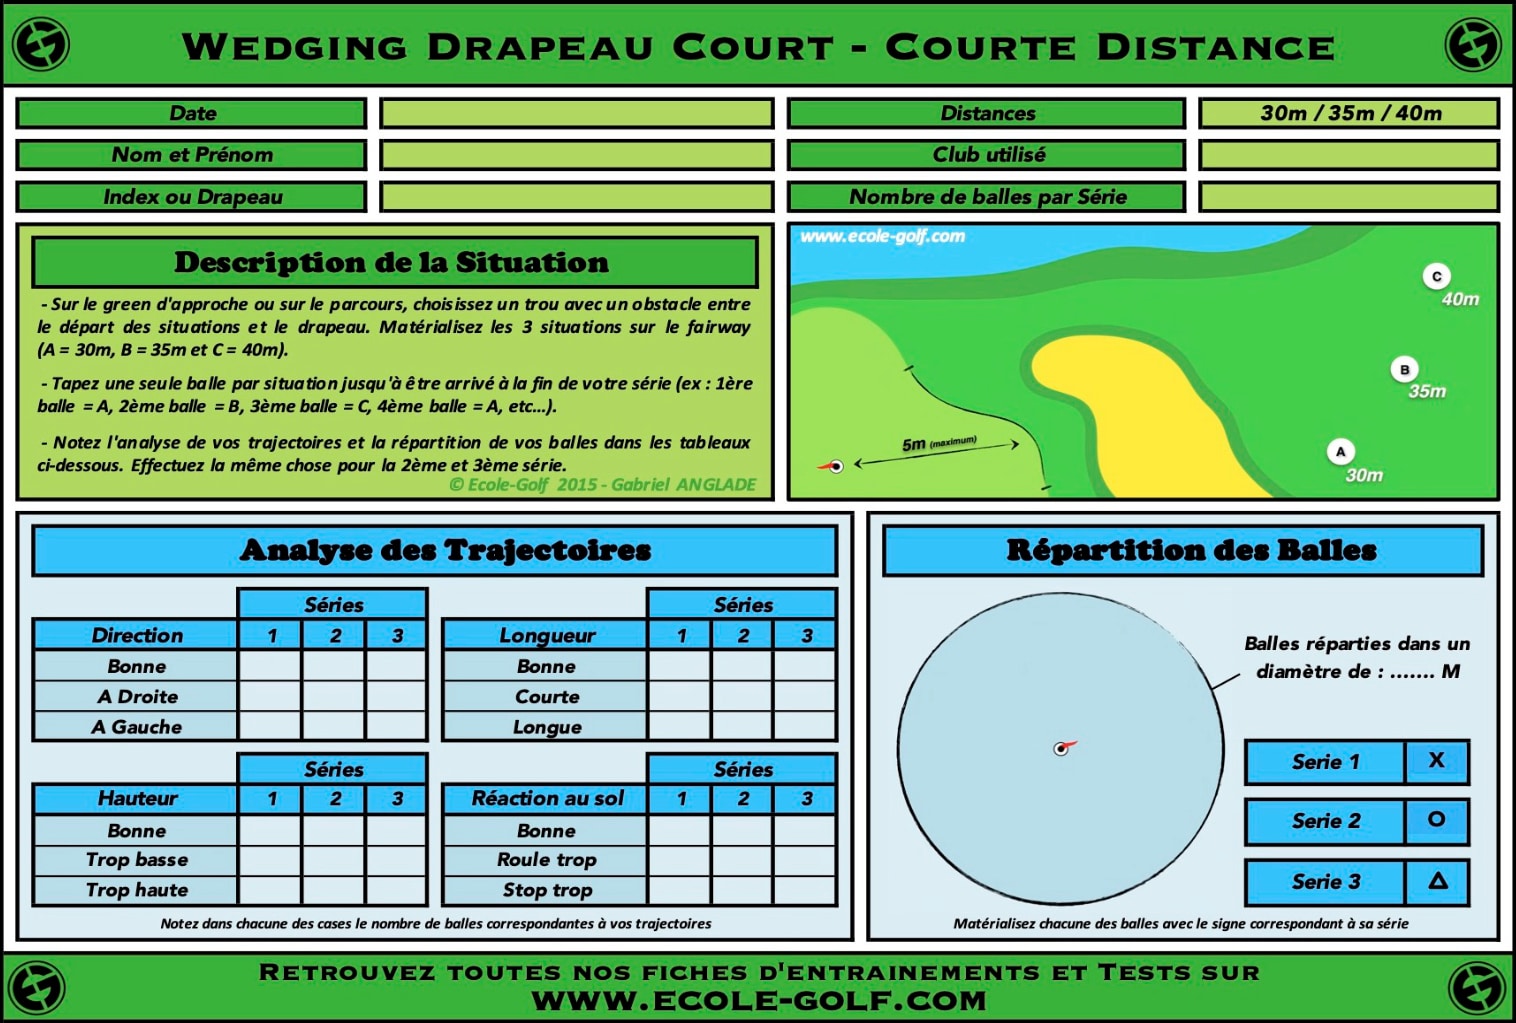 Wedging Drapeau Court - Courte Distance